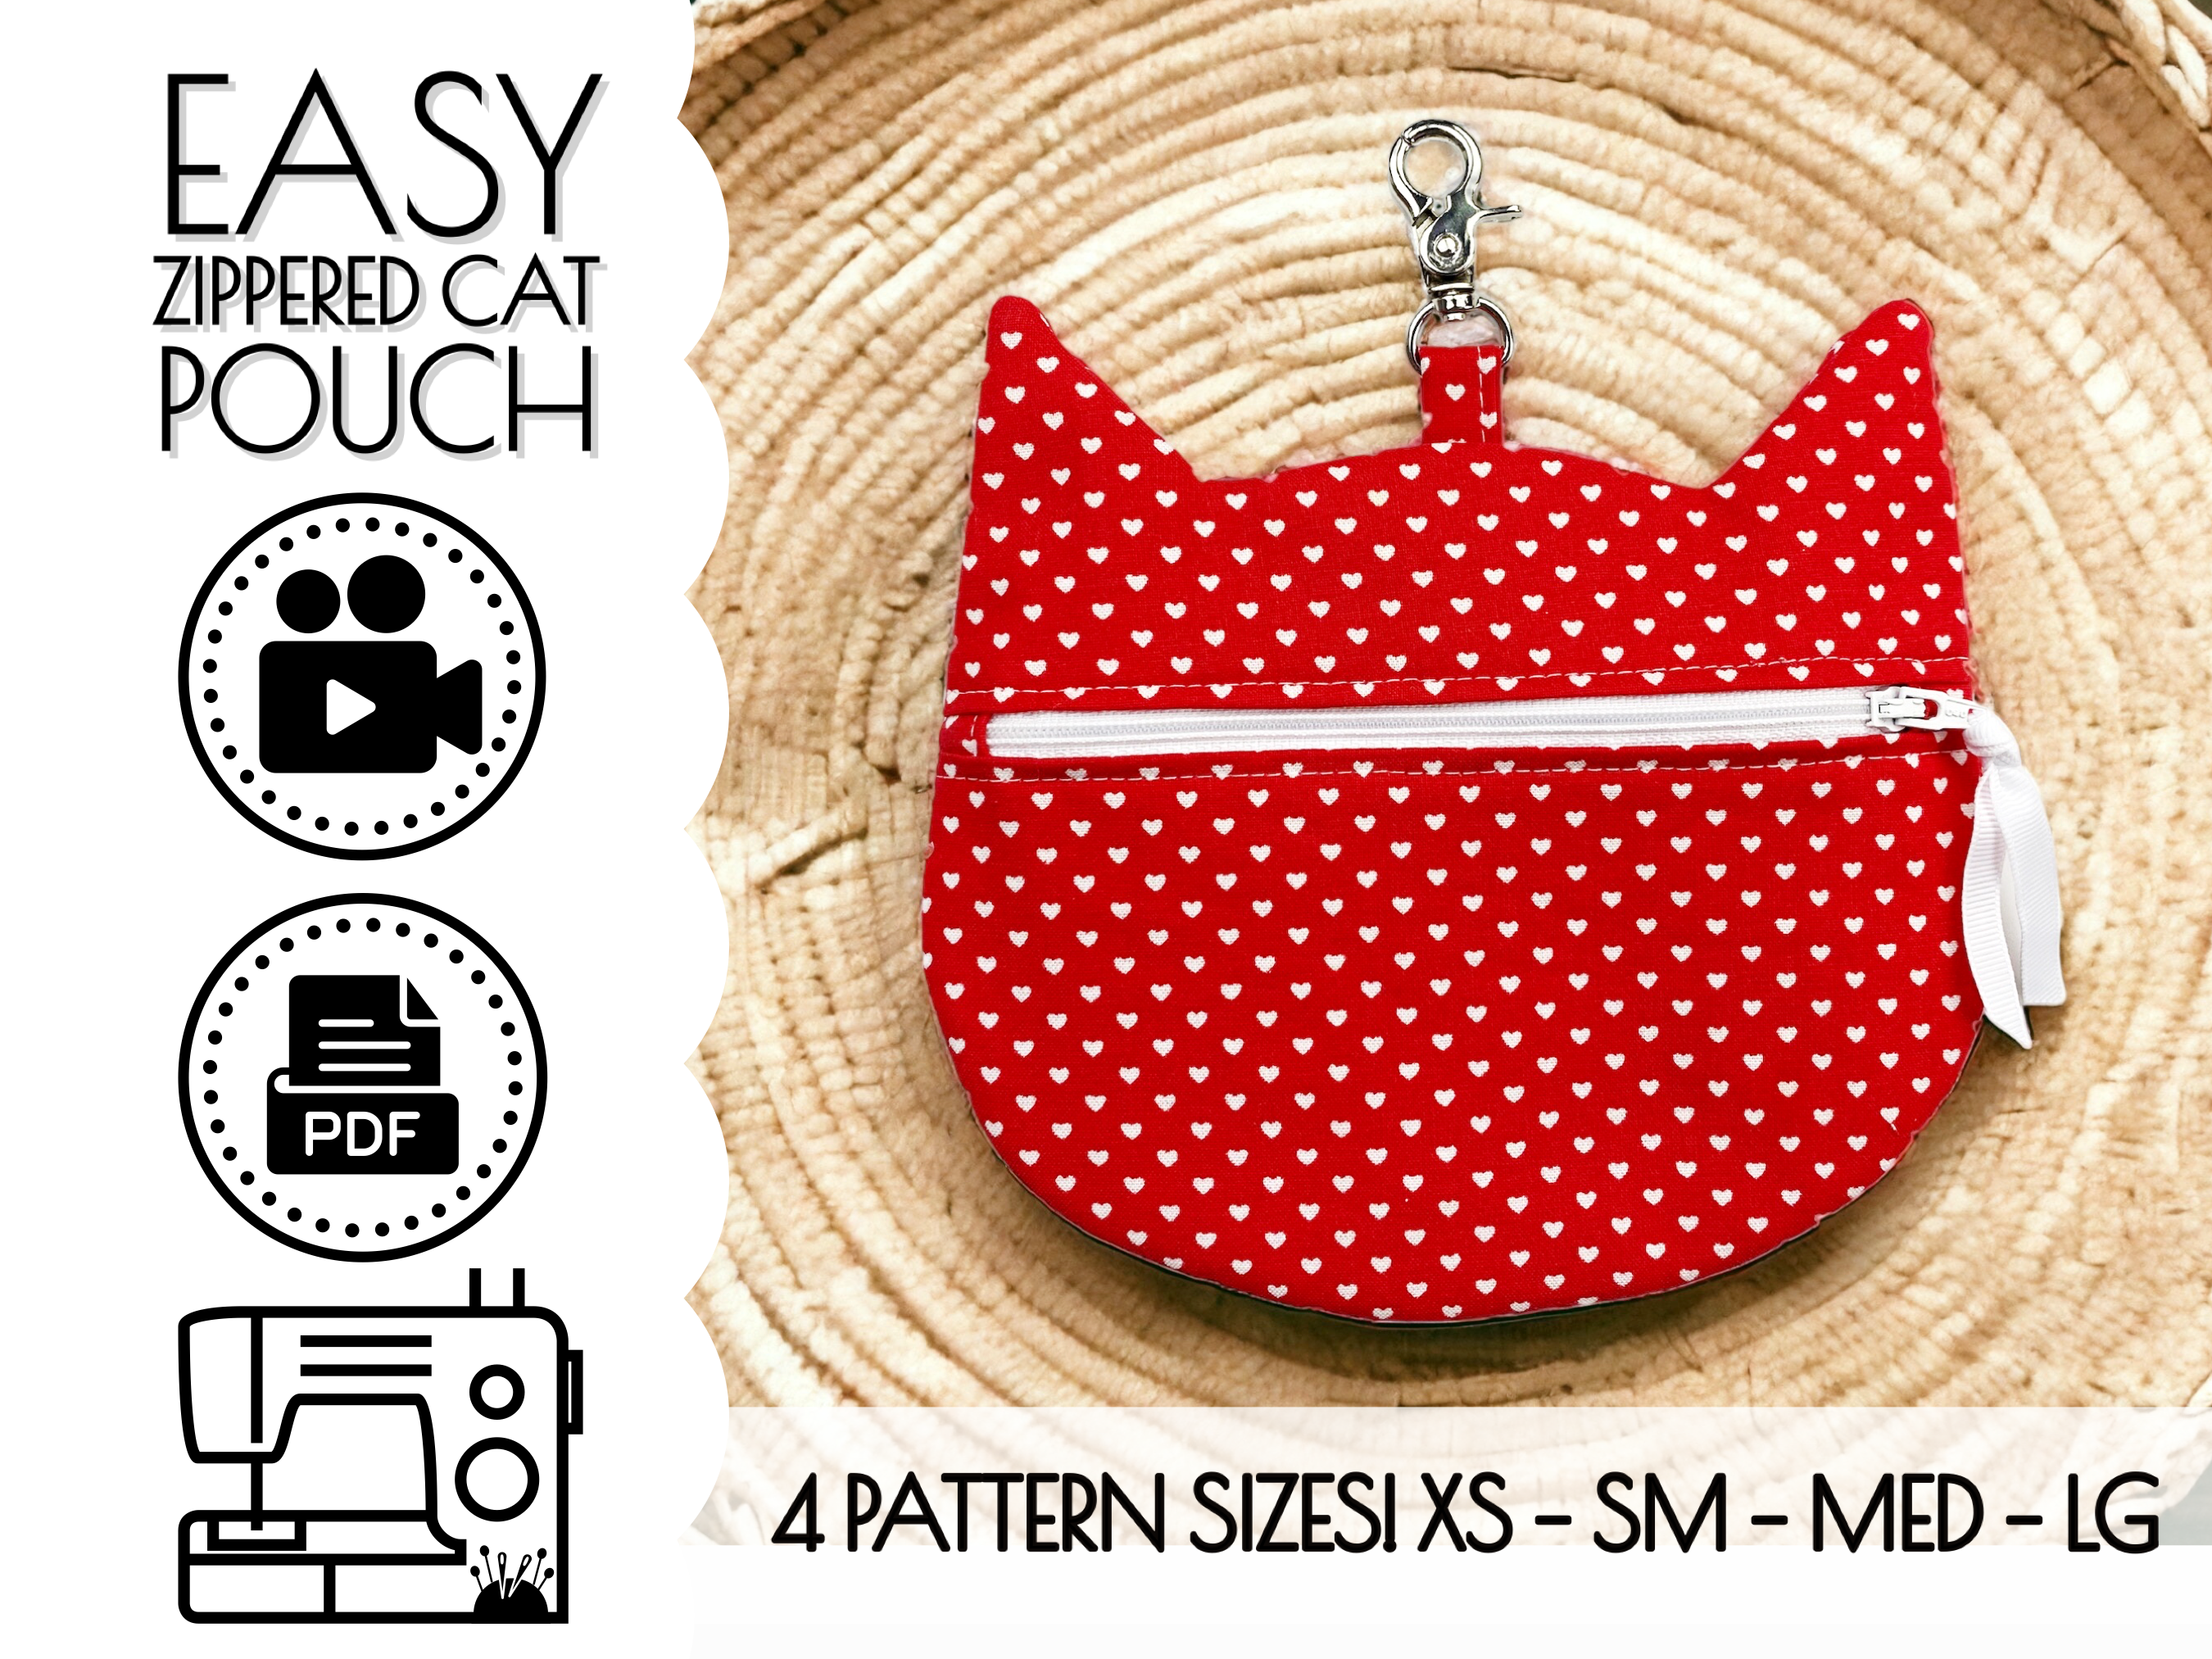 10 Free Knitted Bag Patterns for Beginners | AllFreeKnitting.com